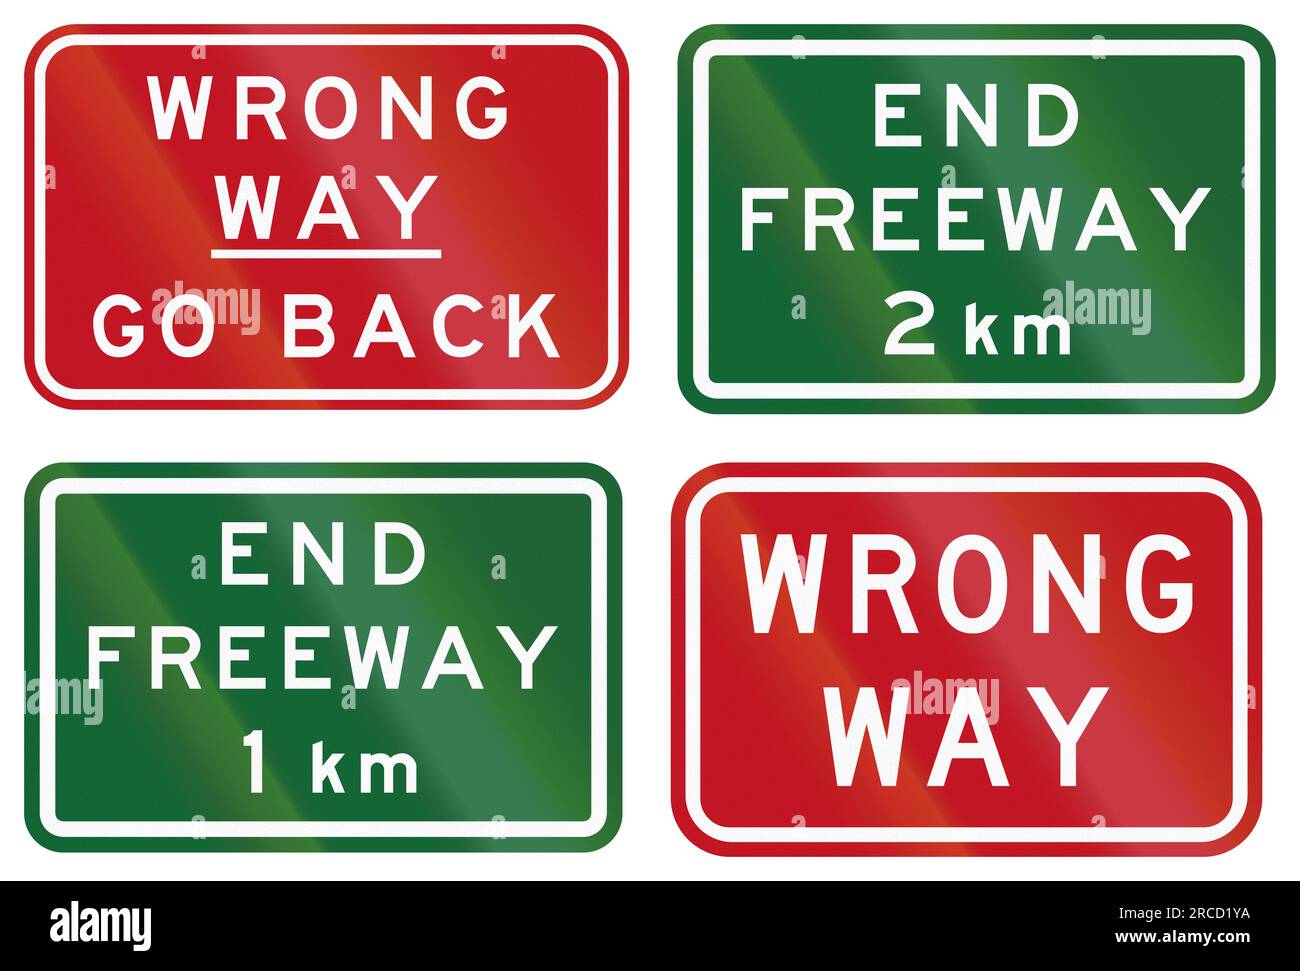 Wrong Way - Go Back In Australia. Stock Photo